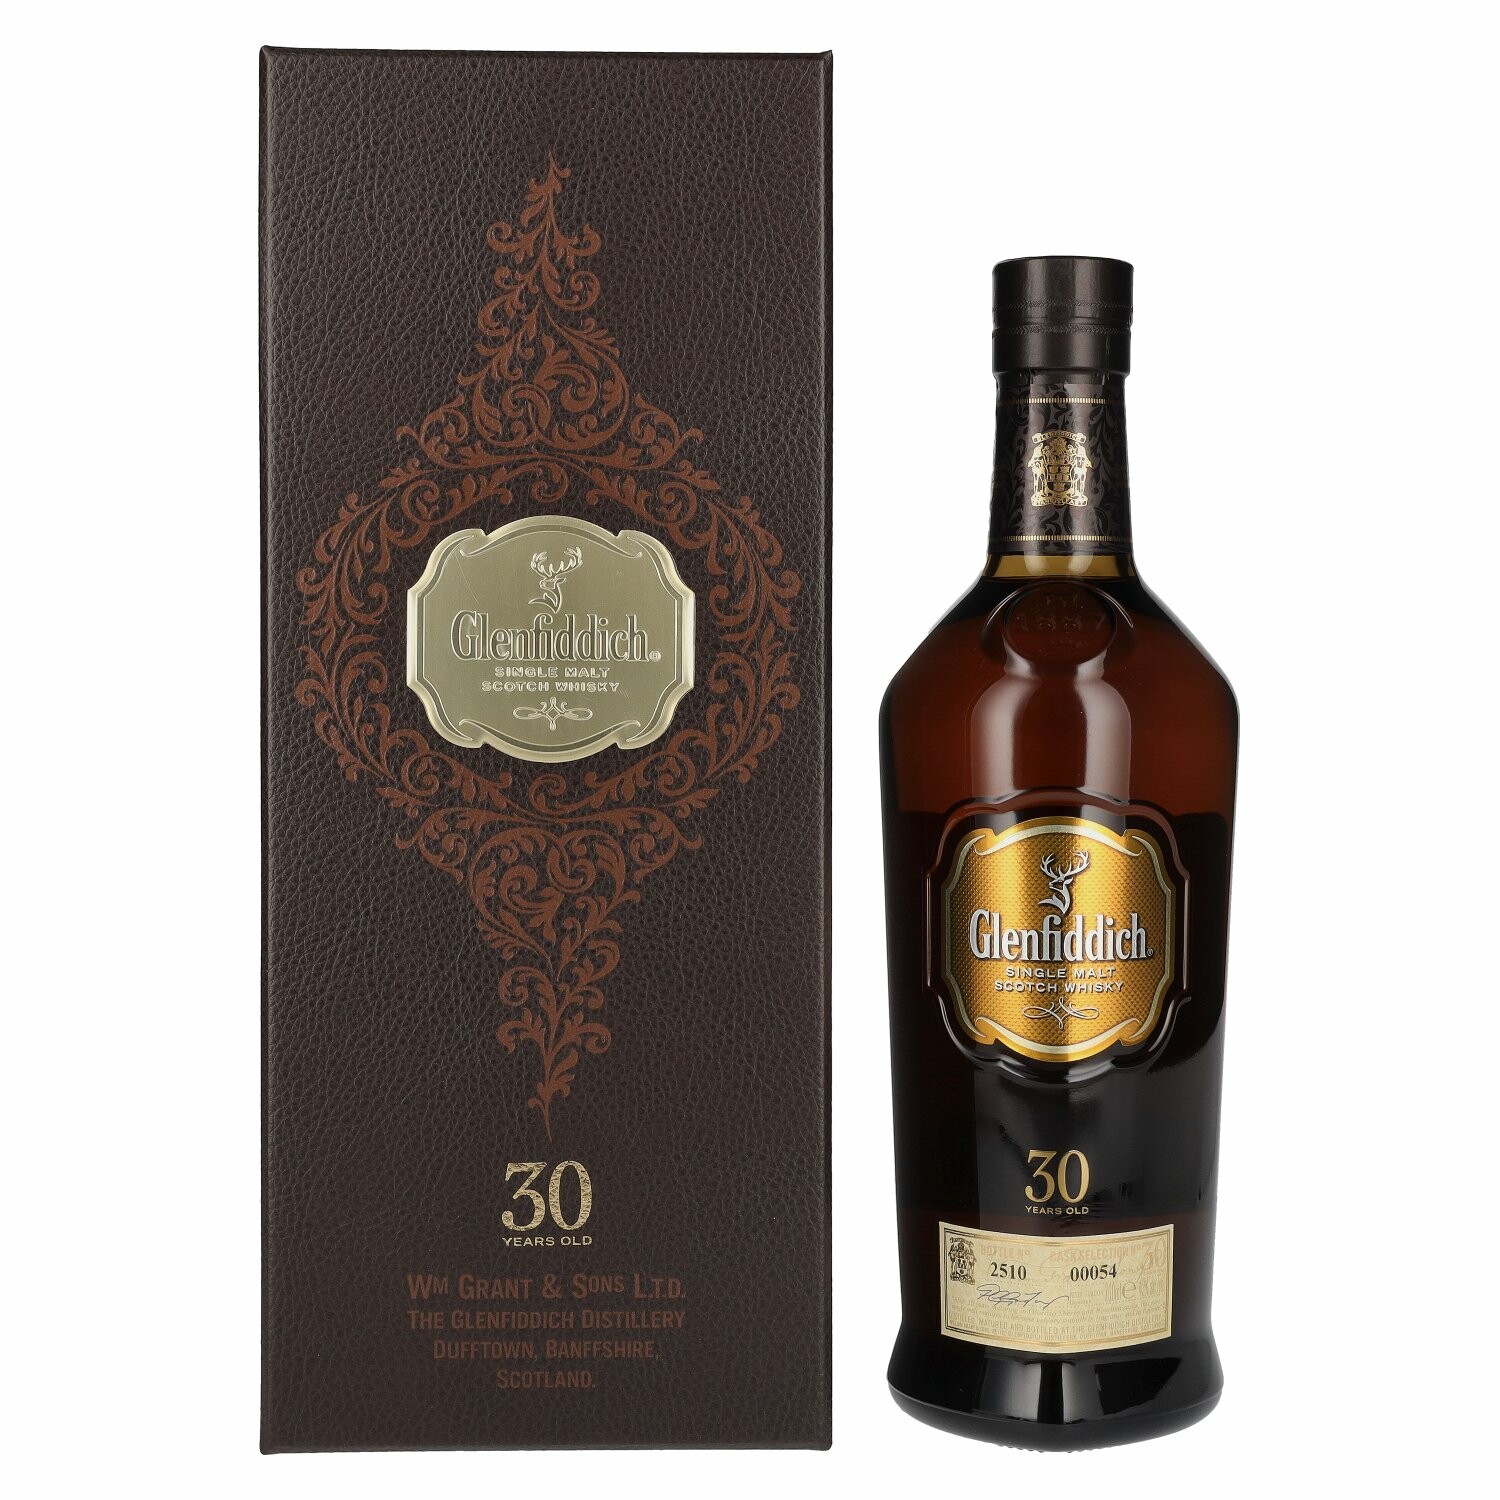 Glenfiddich 30 Years Old Single Malt Scotch Whisky 43% Vol. 0,7l in Giftbox